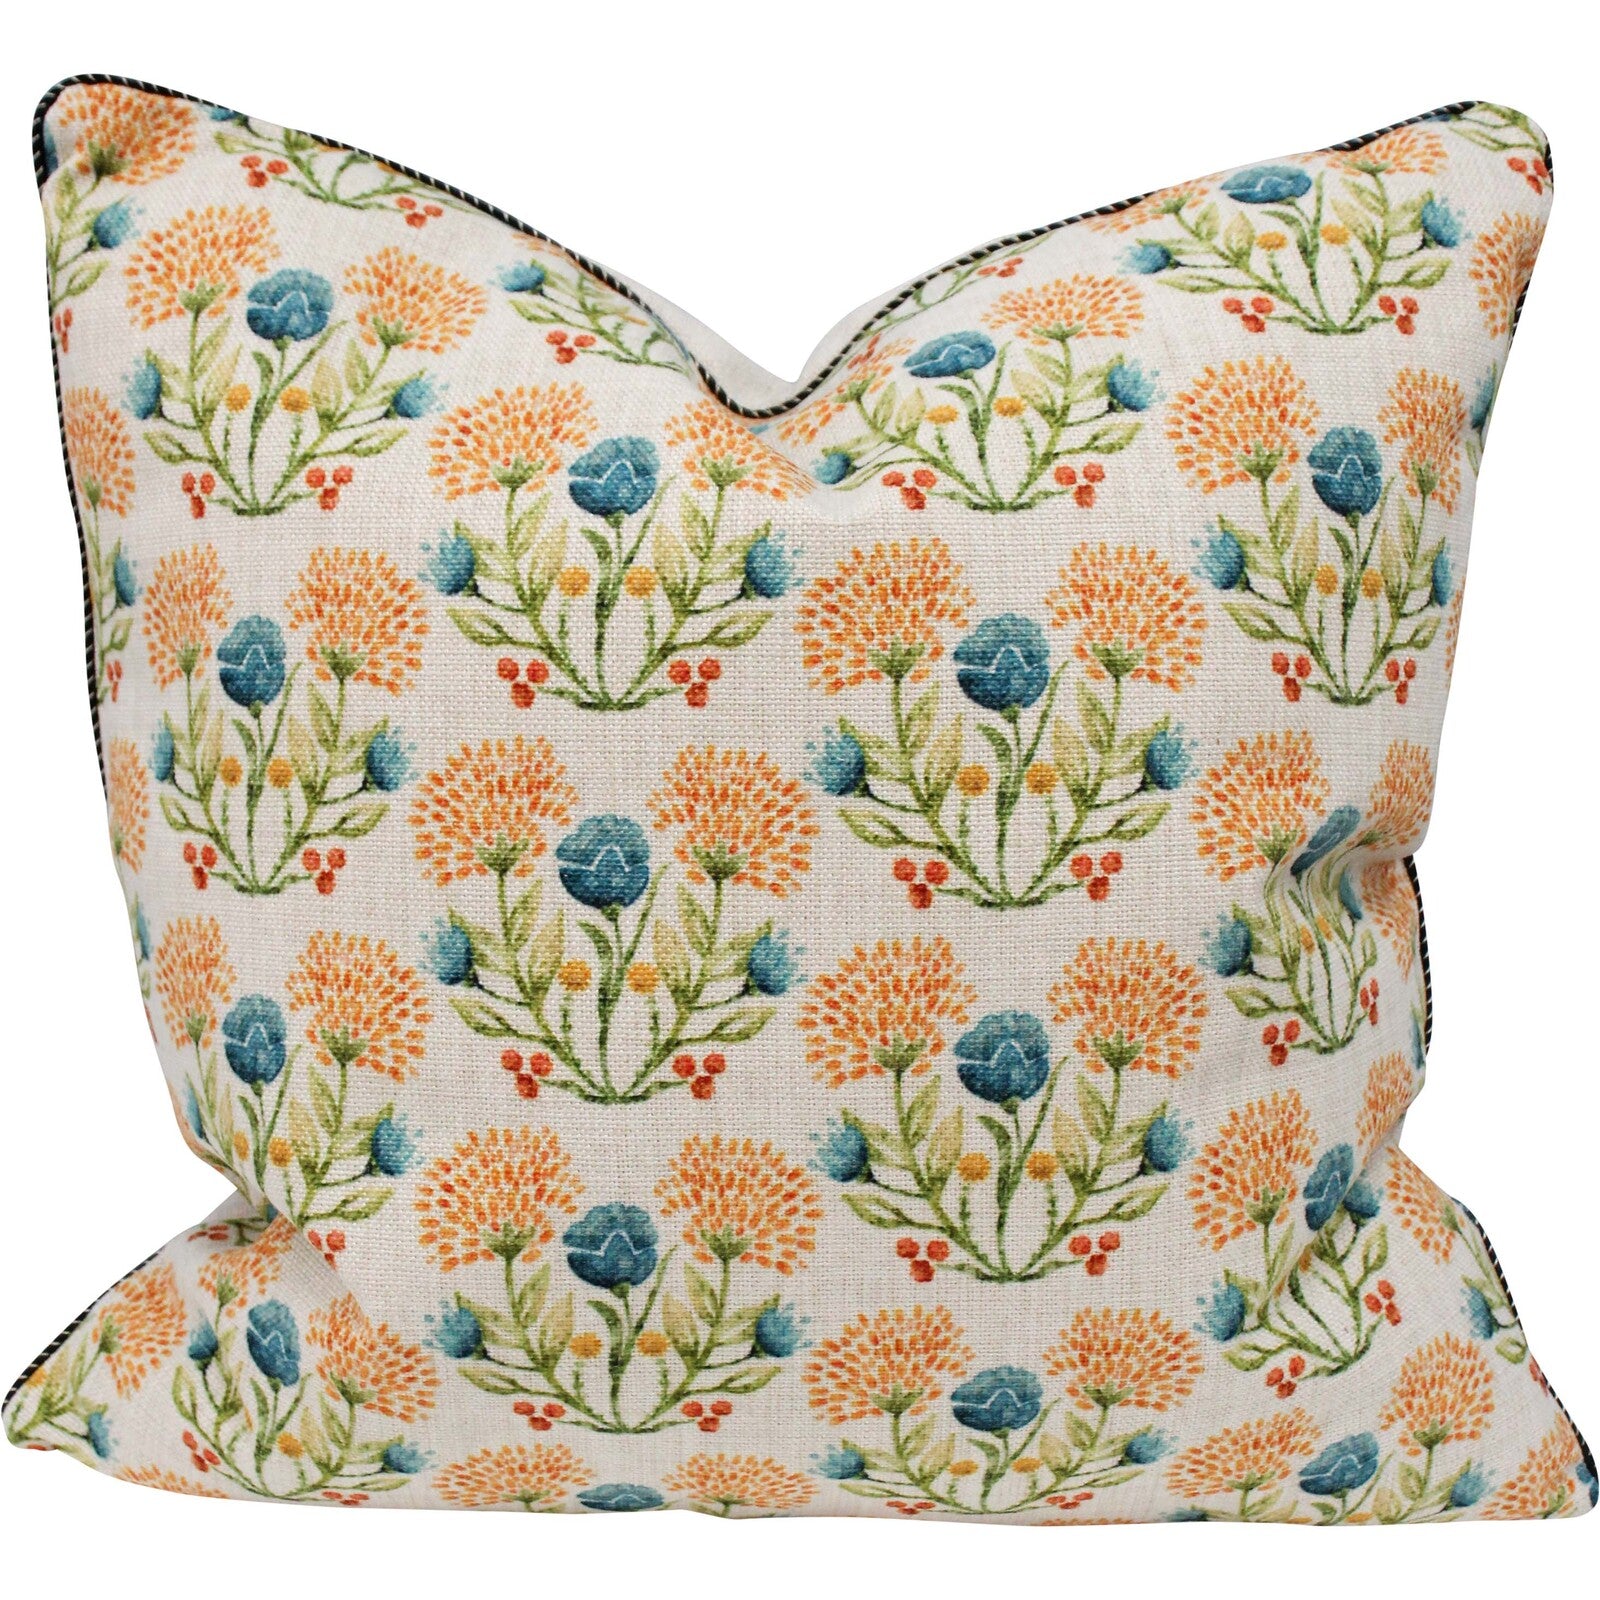 Whimsical Floral Cushion